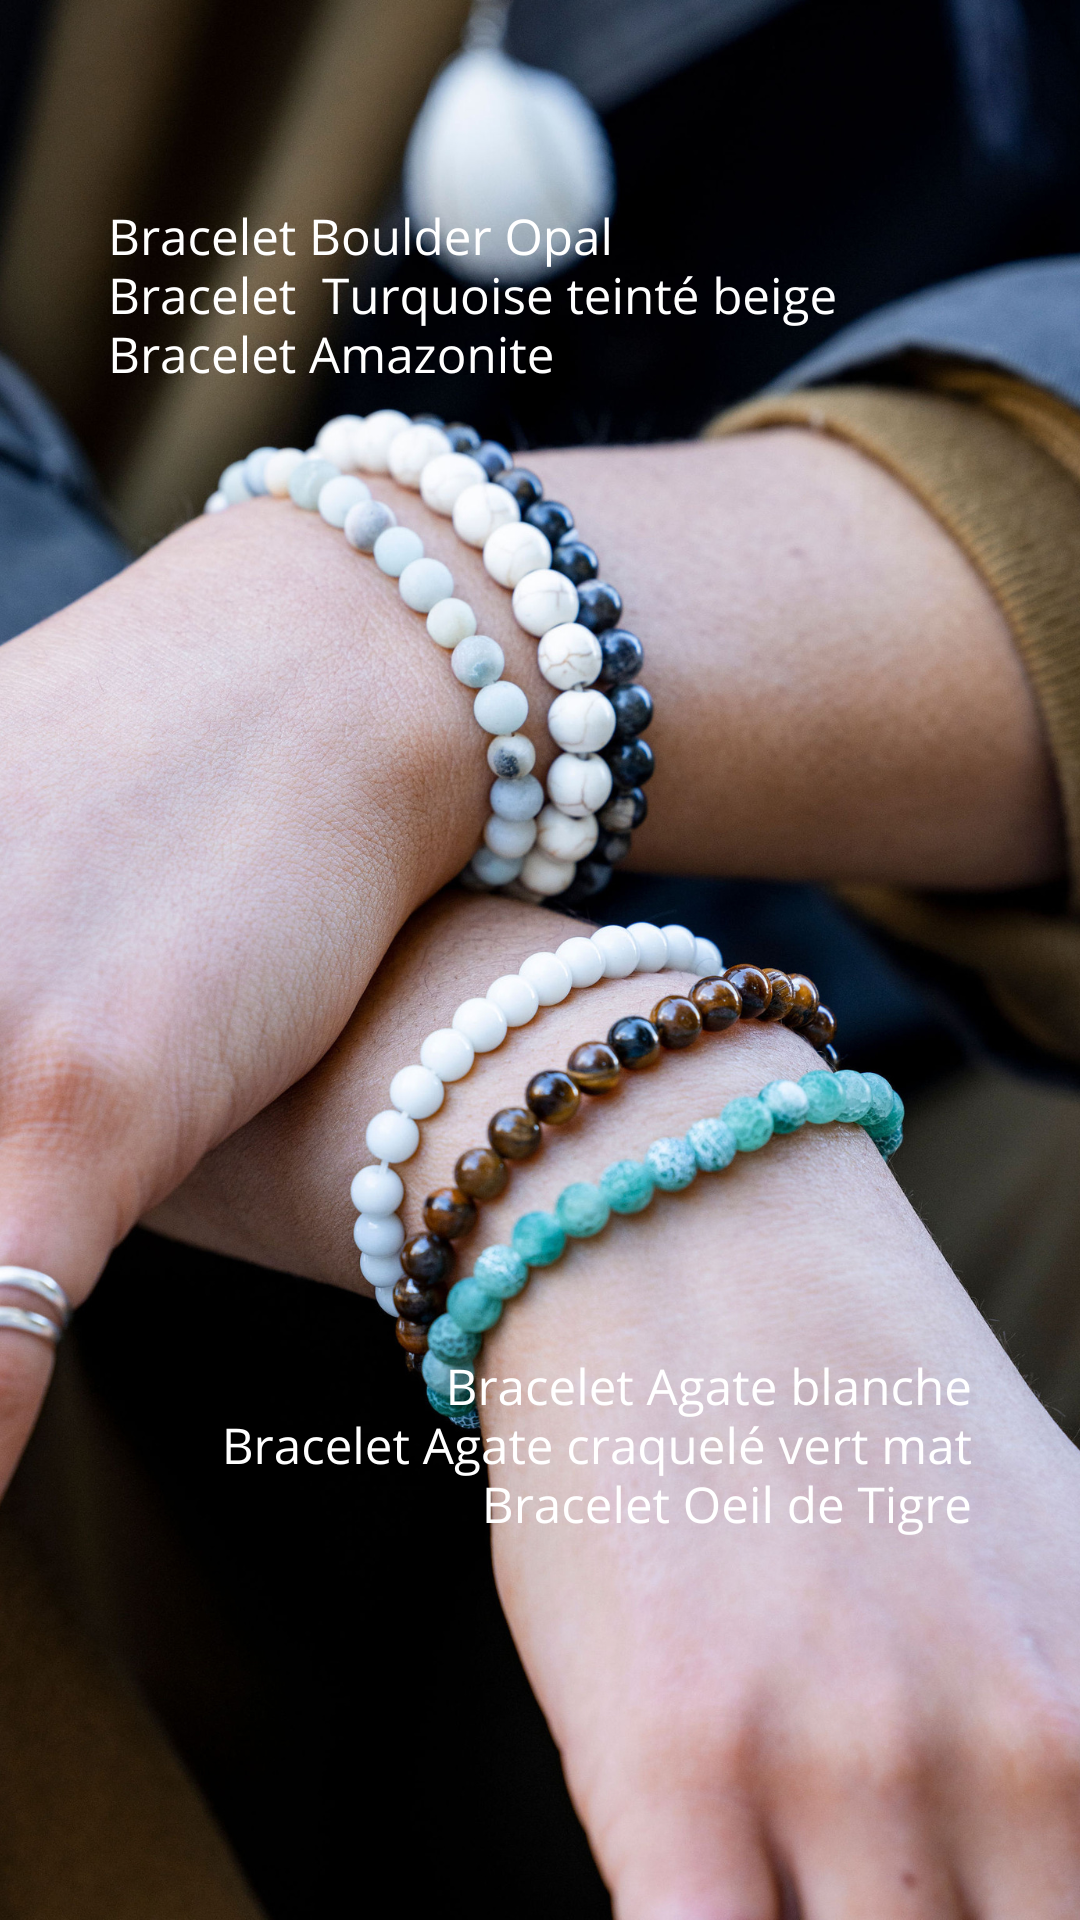 Bracelet Agate blanche